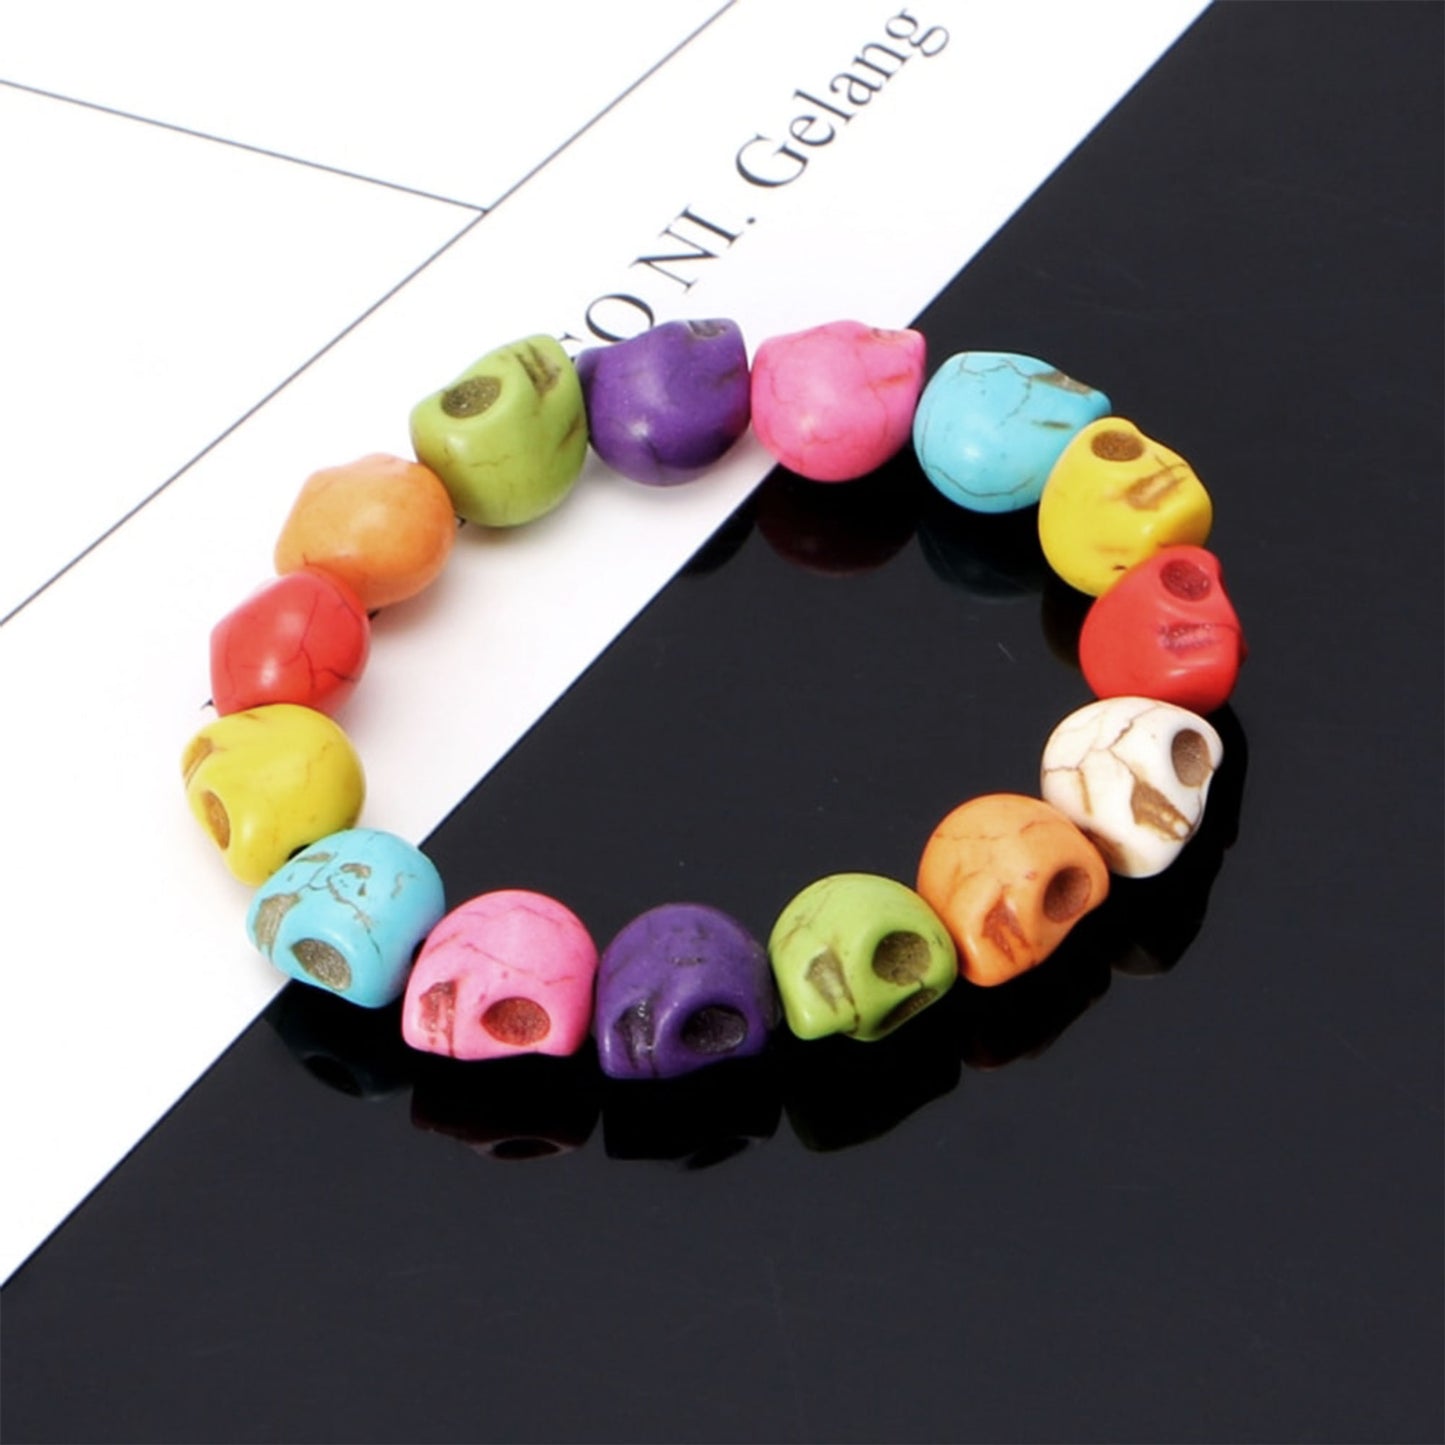 skull bracelet with colorful stone beads for Girls. Trendy Day of the Dead Mexican Jewelry. Brazalete de calaveras Dia de Muertos joyeria mexicana para mujer. Fridamaniacs Frida Inspired wristband accessory